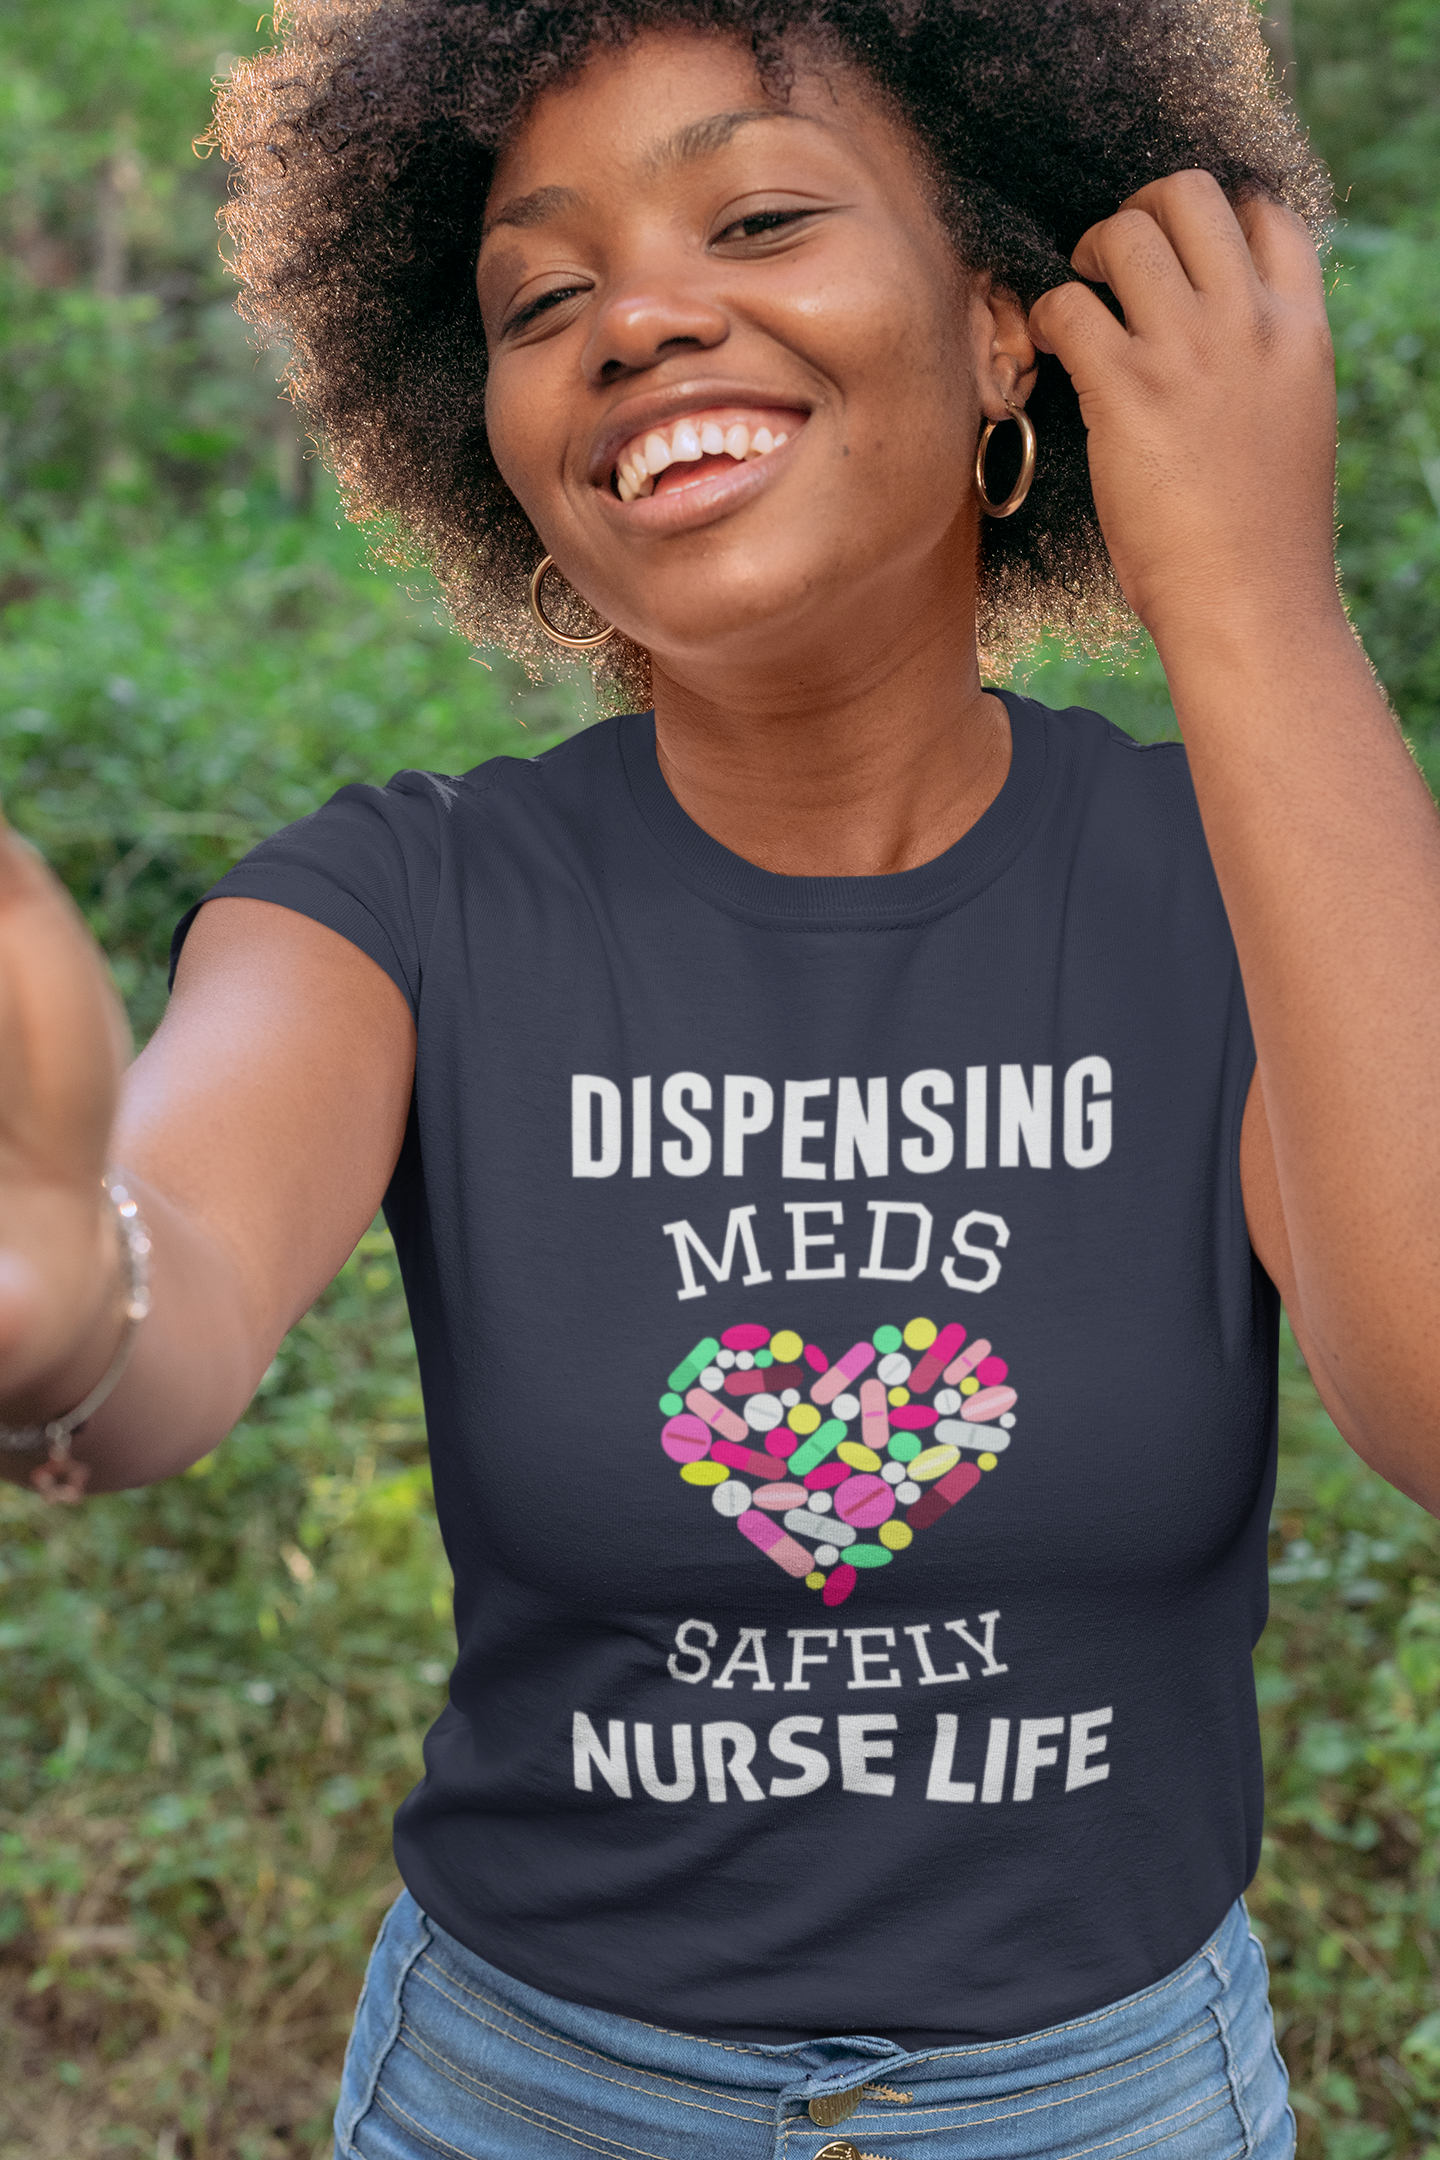 Dispensing Meds Safely Nurse Life, Nursing Dress, Nurse Gift, Nurse Shirt, Nurse Graphic, Doctor Gift, Med Student Gift, Stethoscope Charm